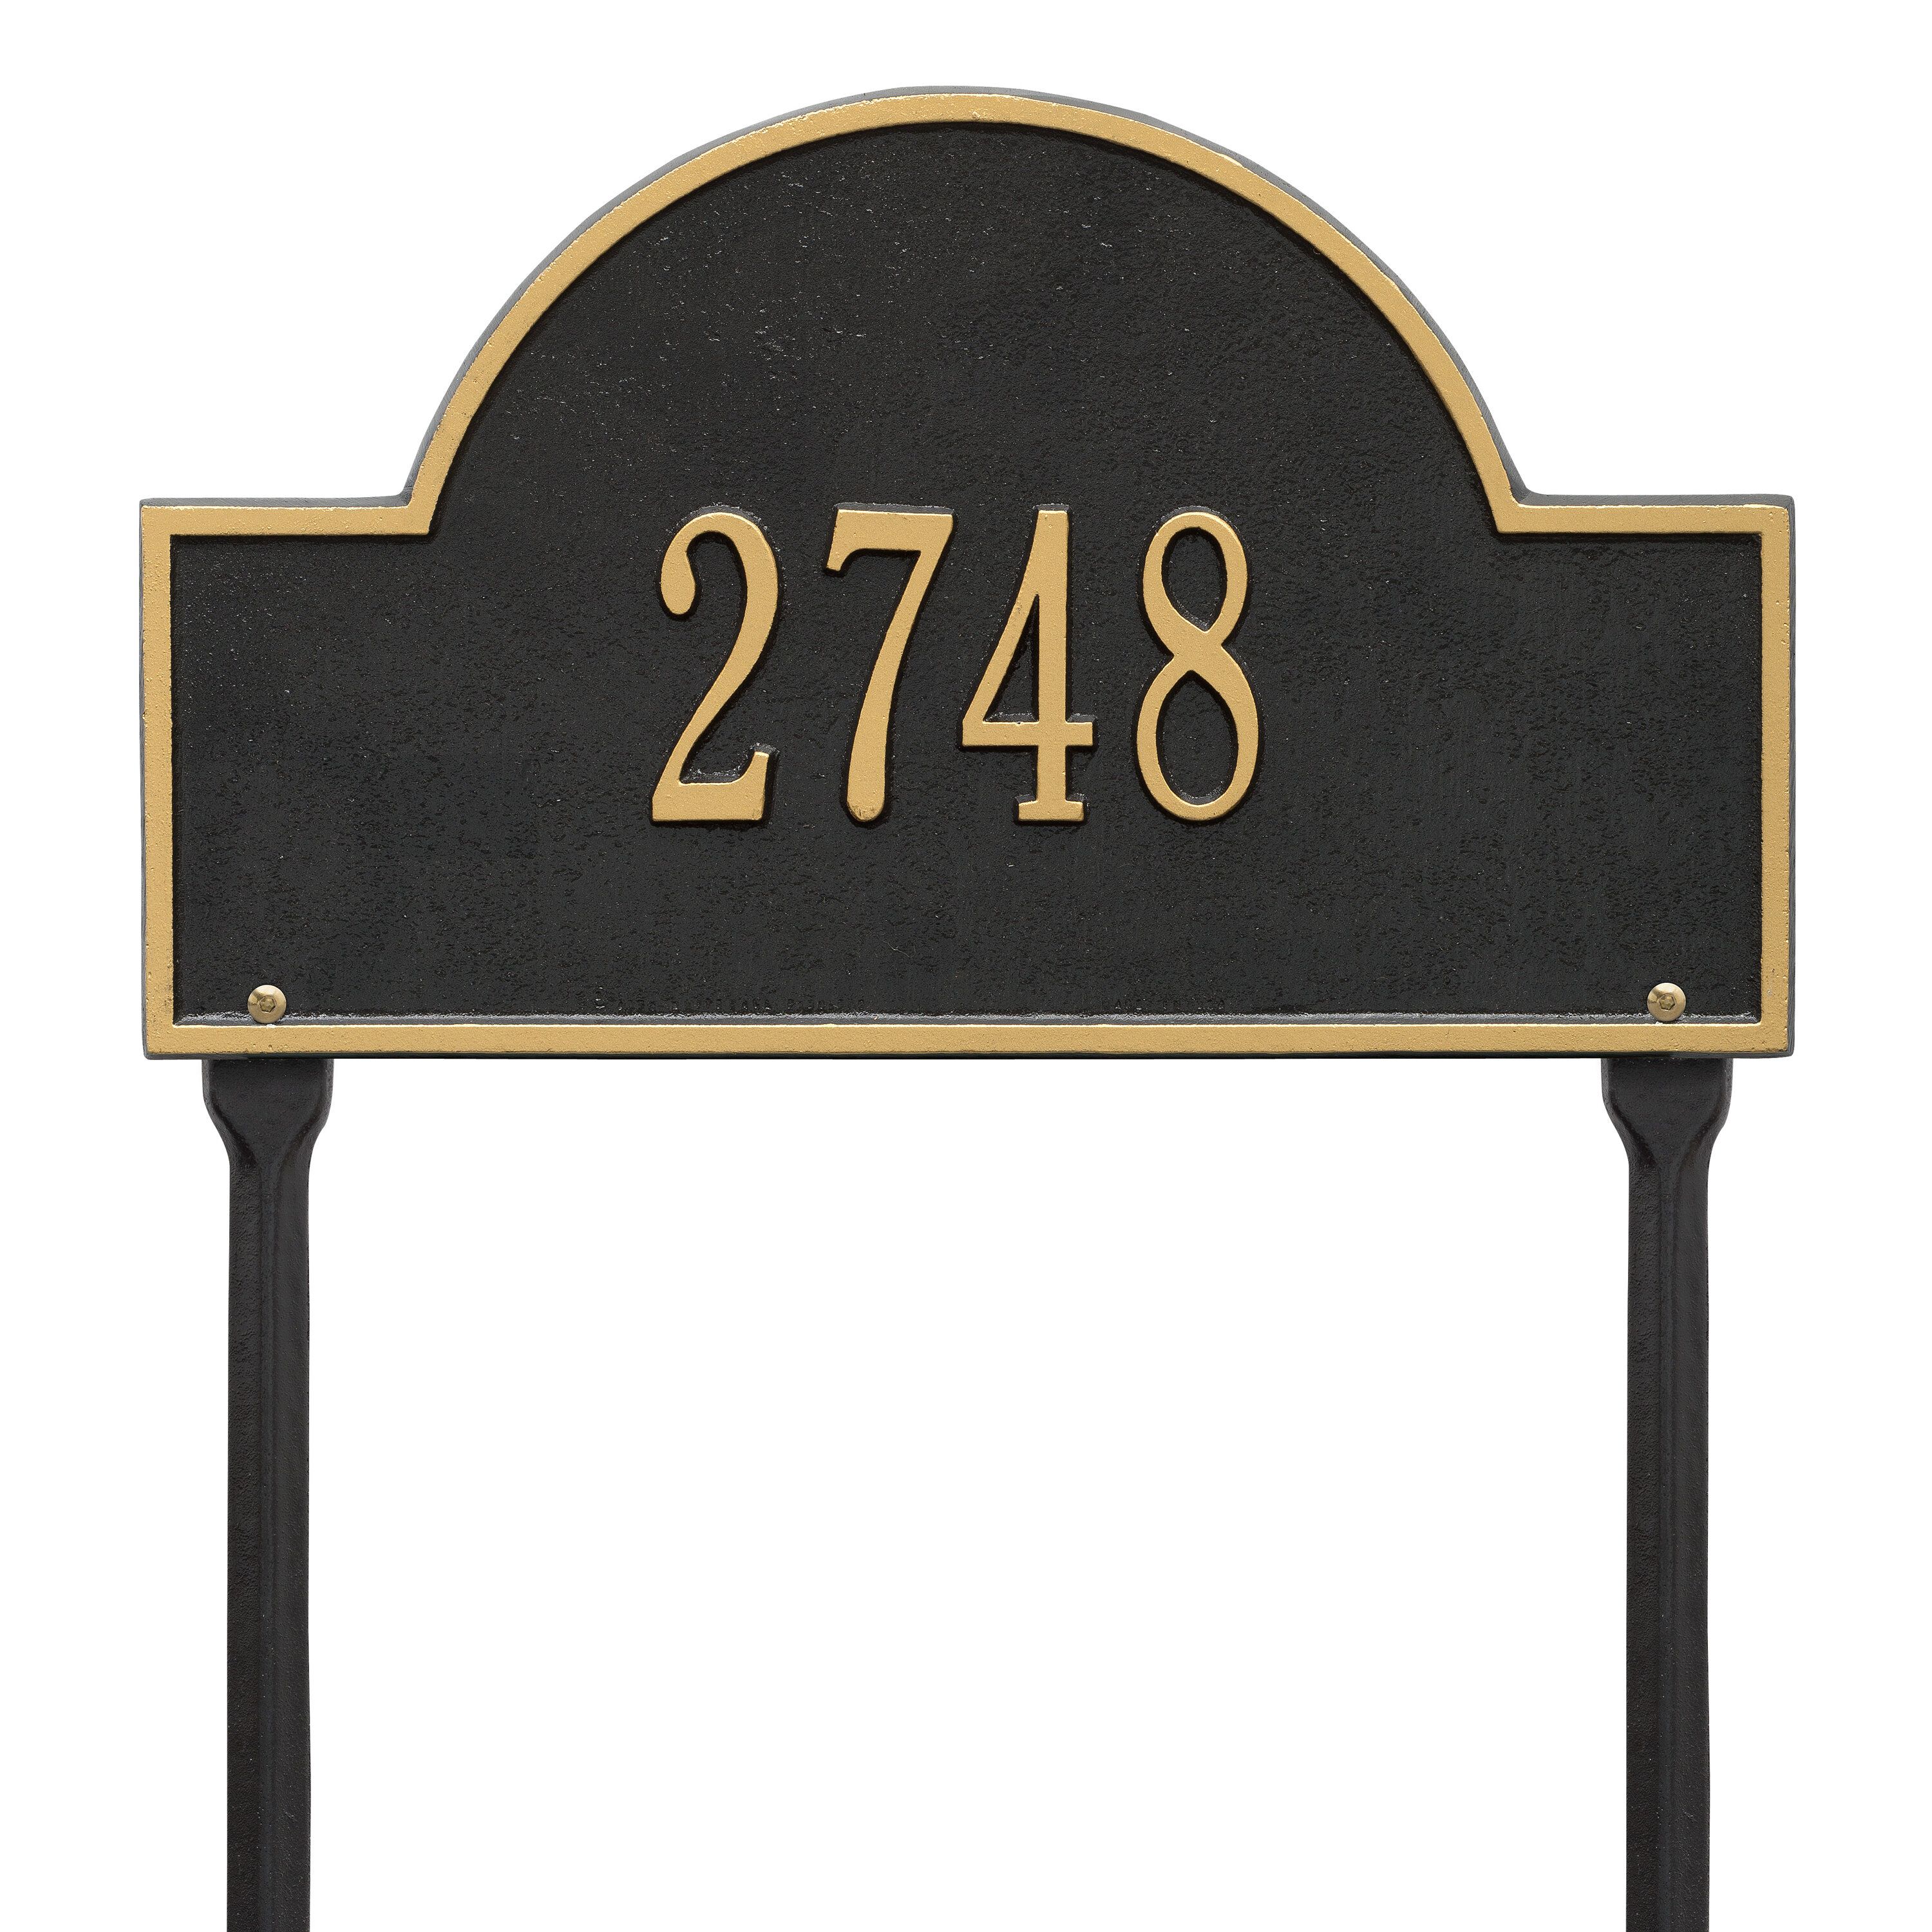 Whitehall Arch Marker - Standard Lawn - One Line Address Plaque